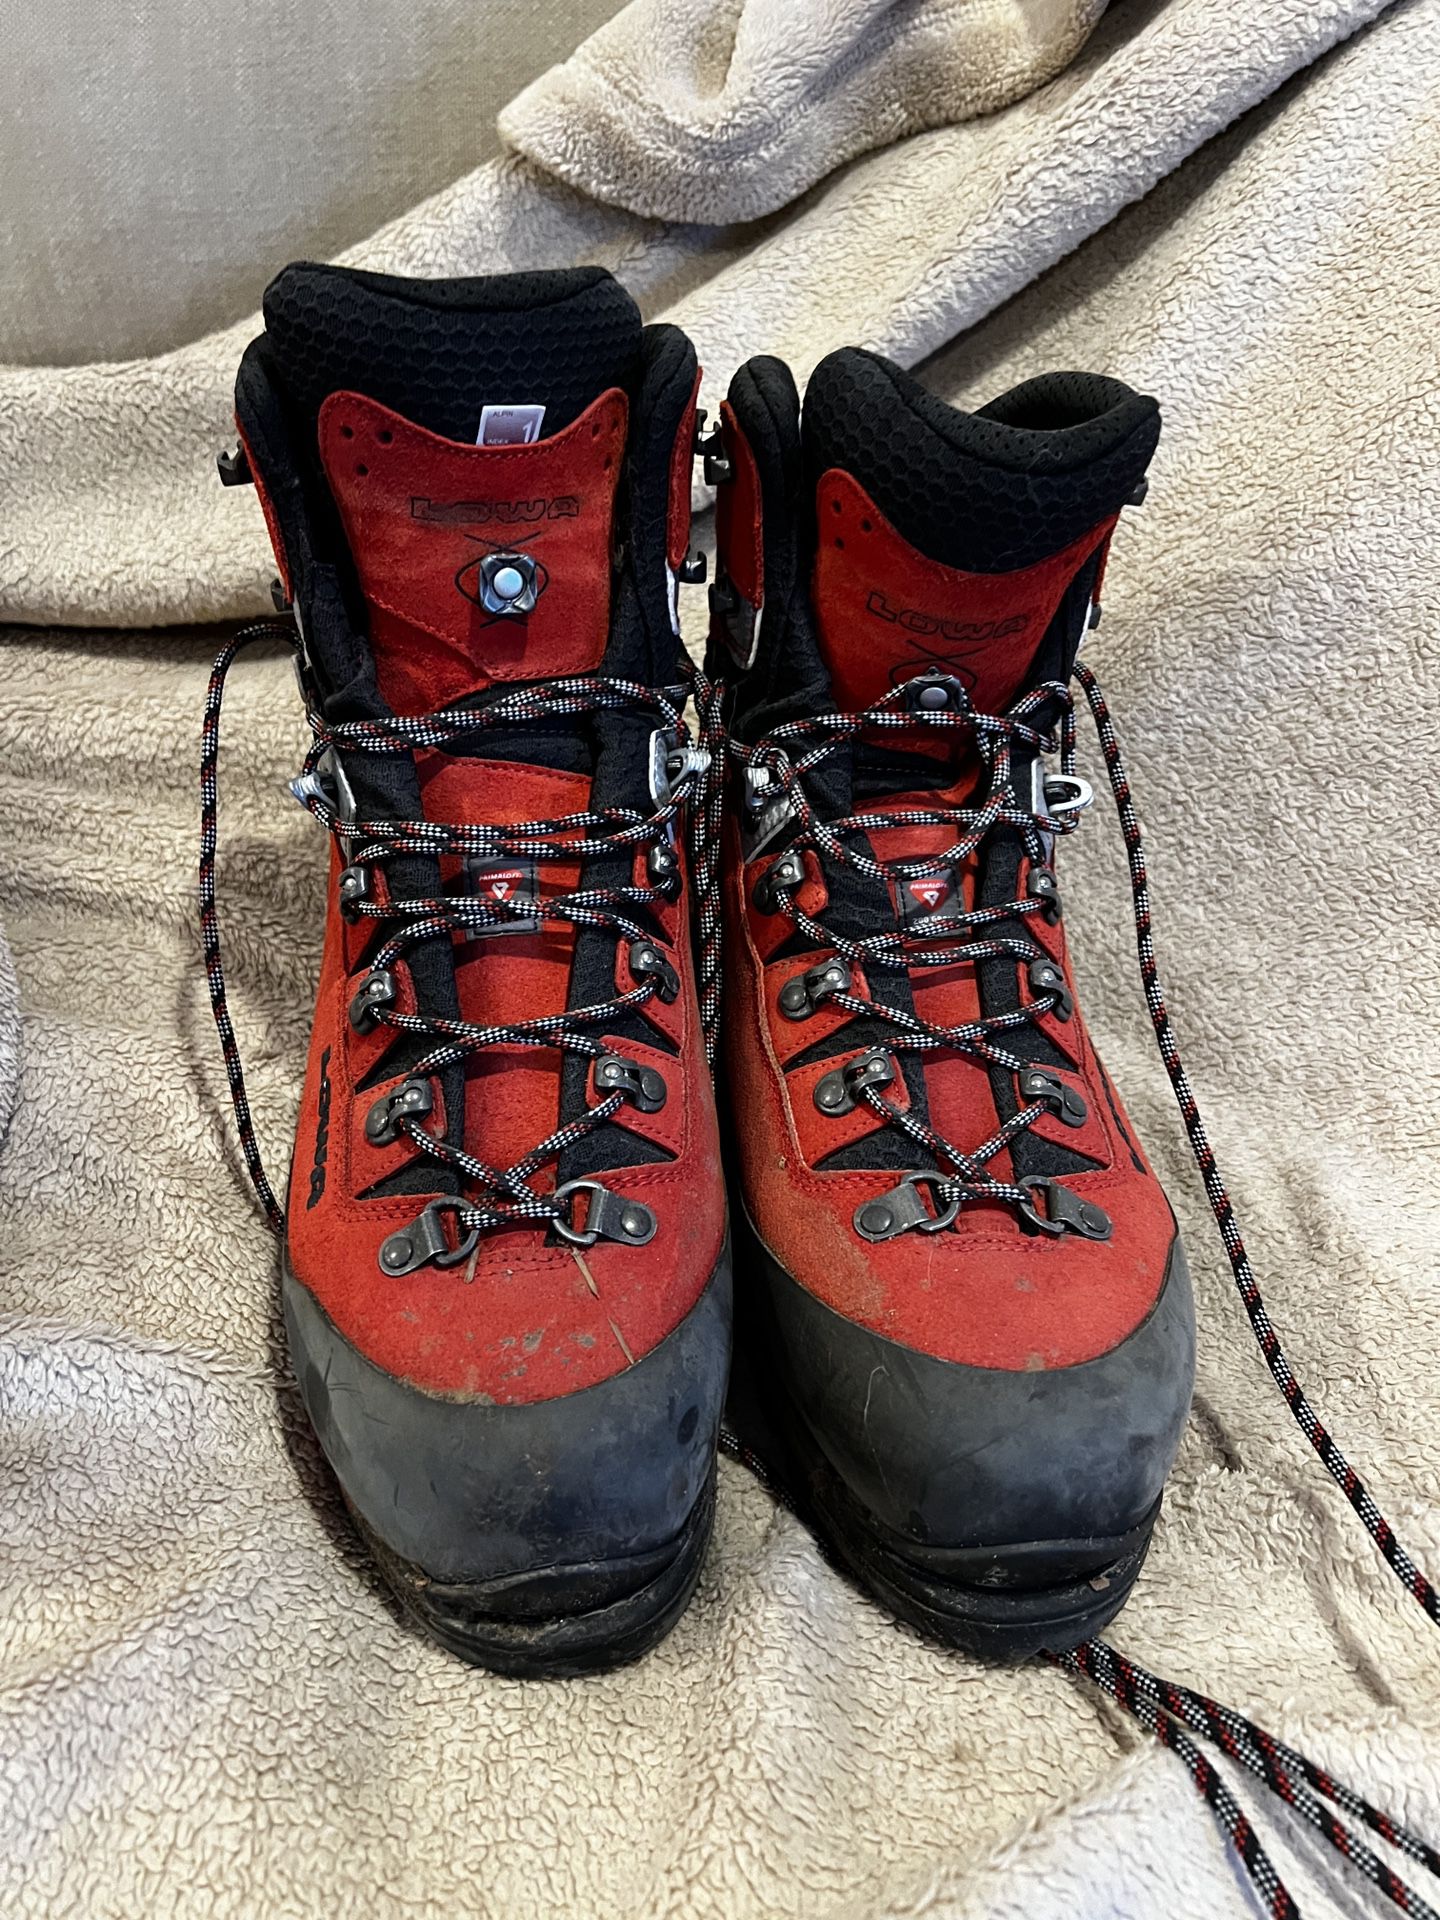 Lowa mountaineering boots (US 11.5)